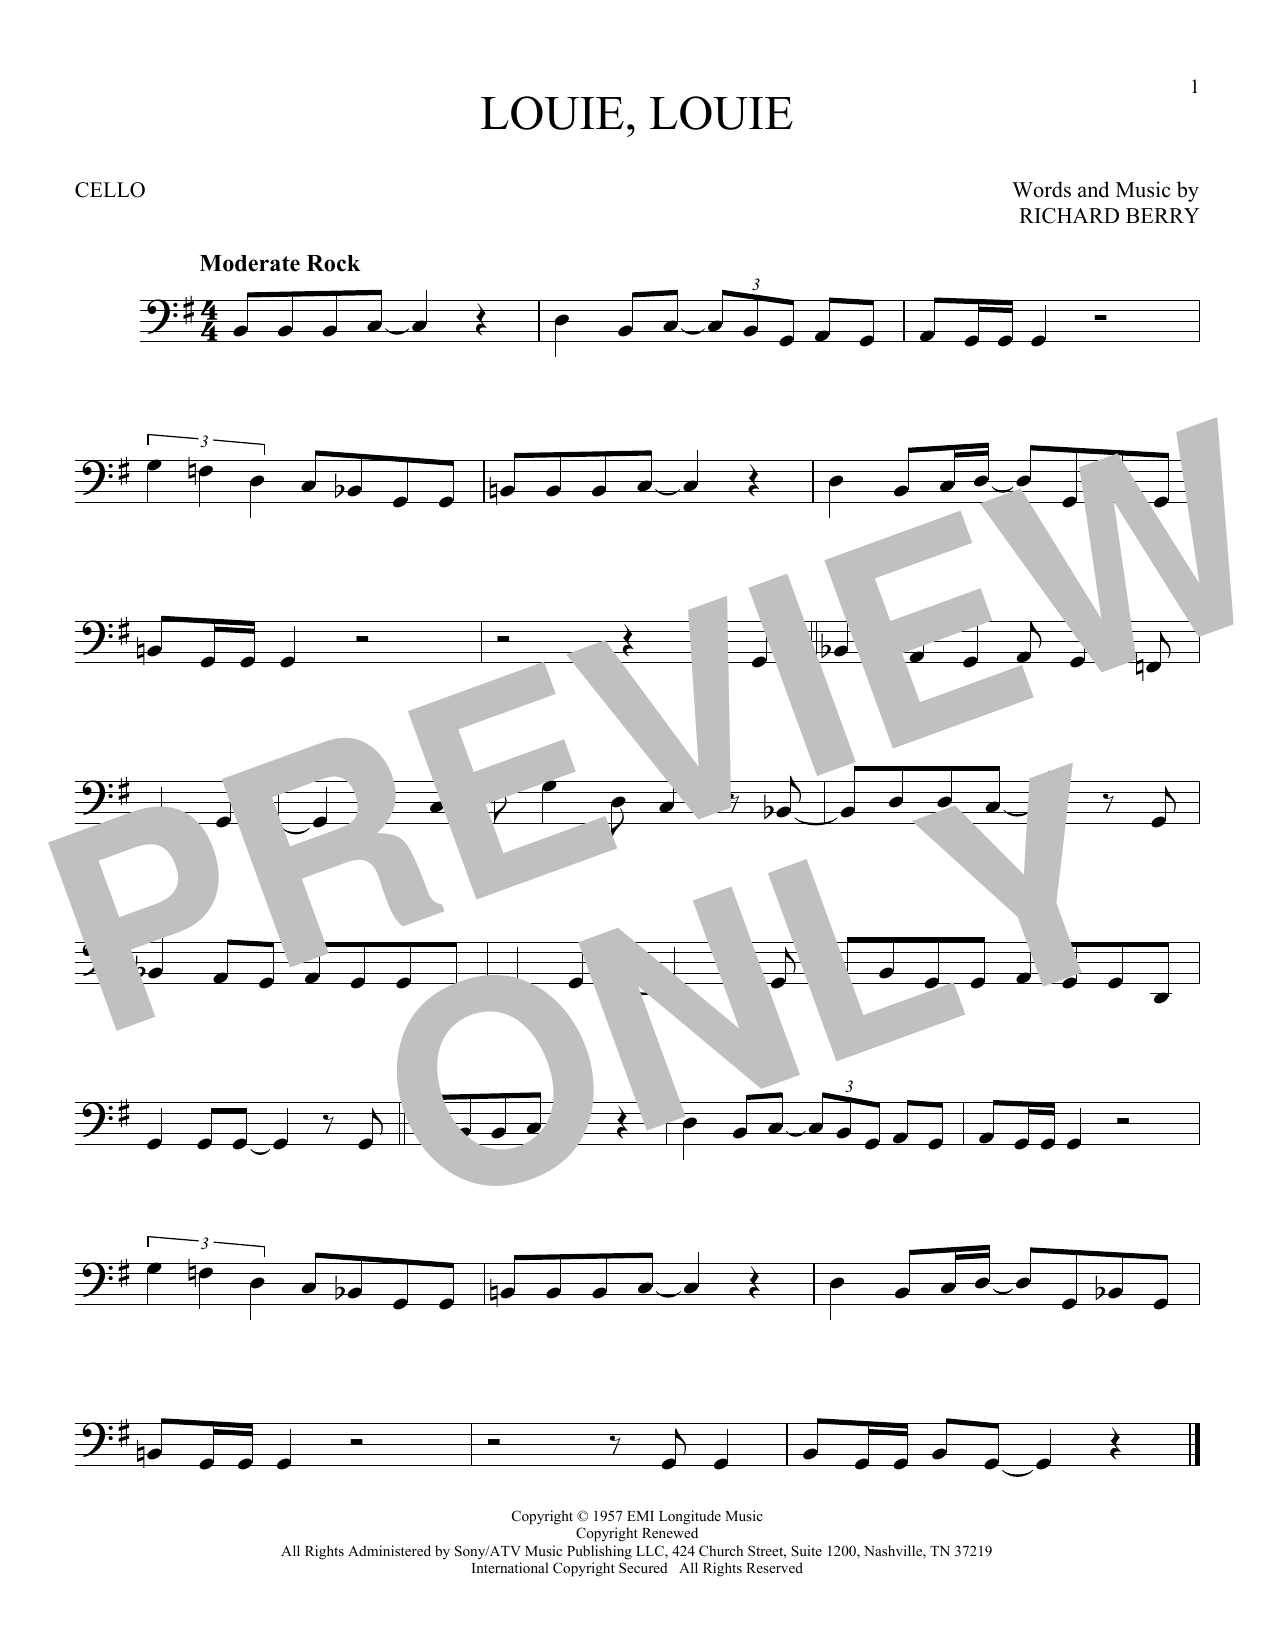 Kingsmen Louie, Louie Sheet Music Notes & Chords for Tenor Saxophone - Download or Print PDF